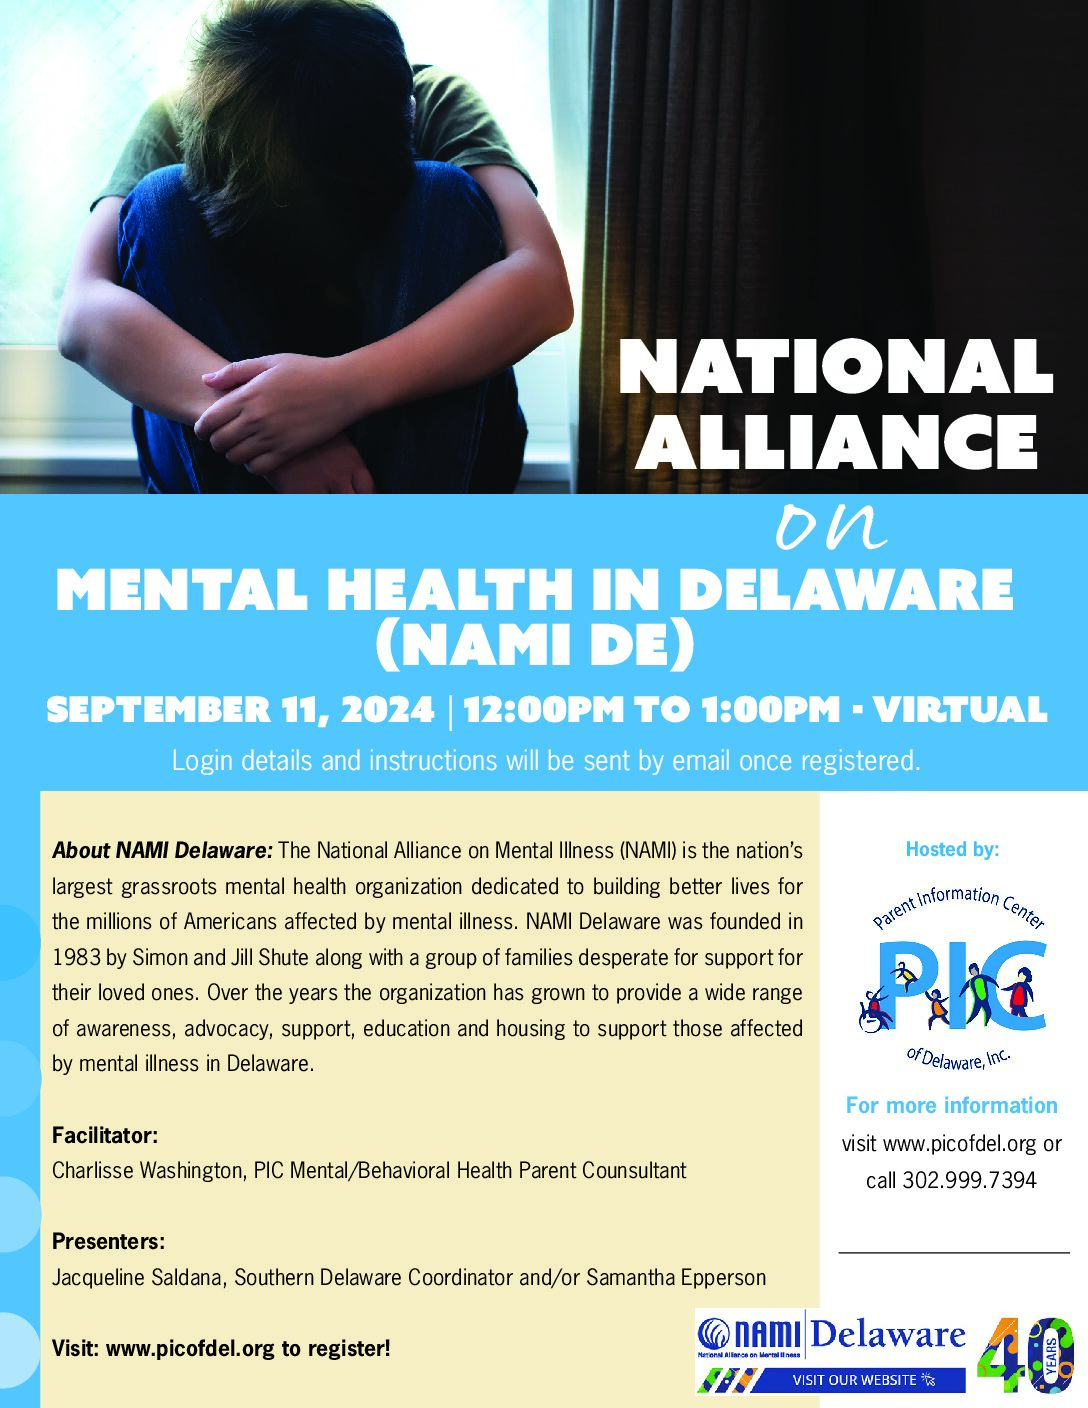 National Alliance on Mental Health in Delaware